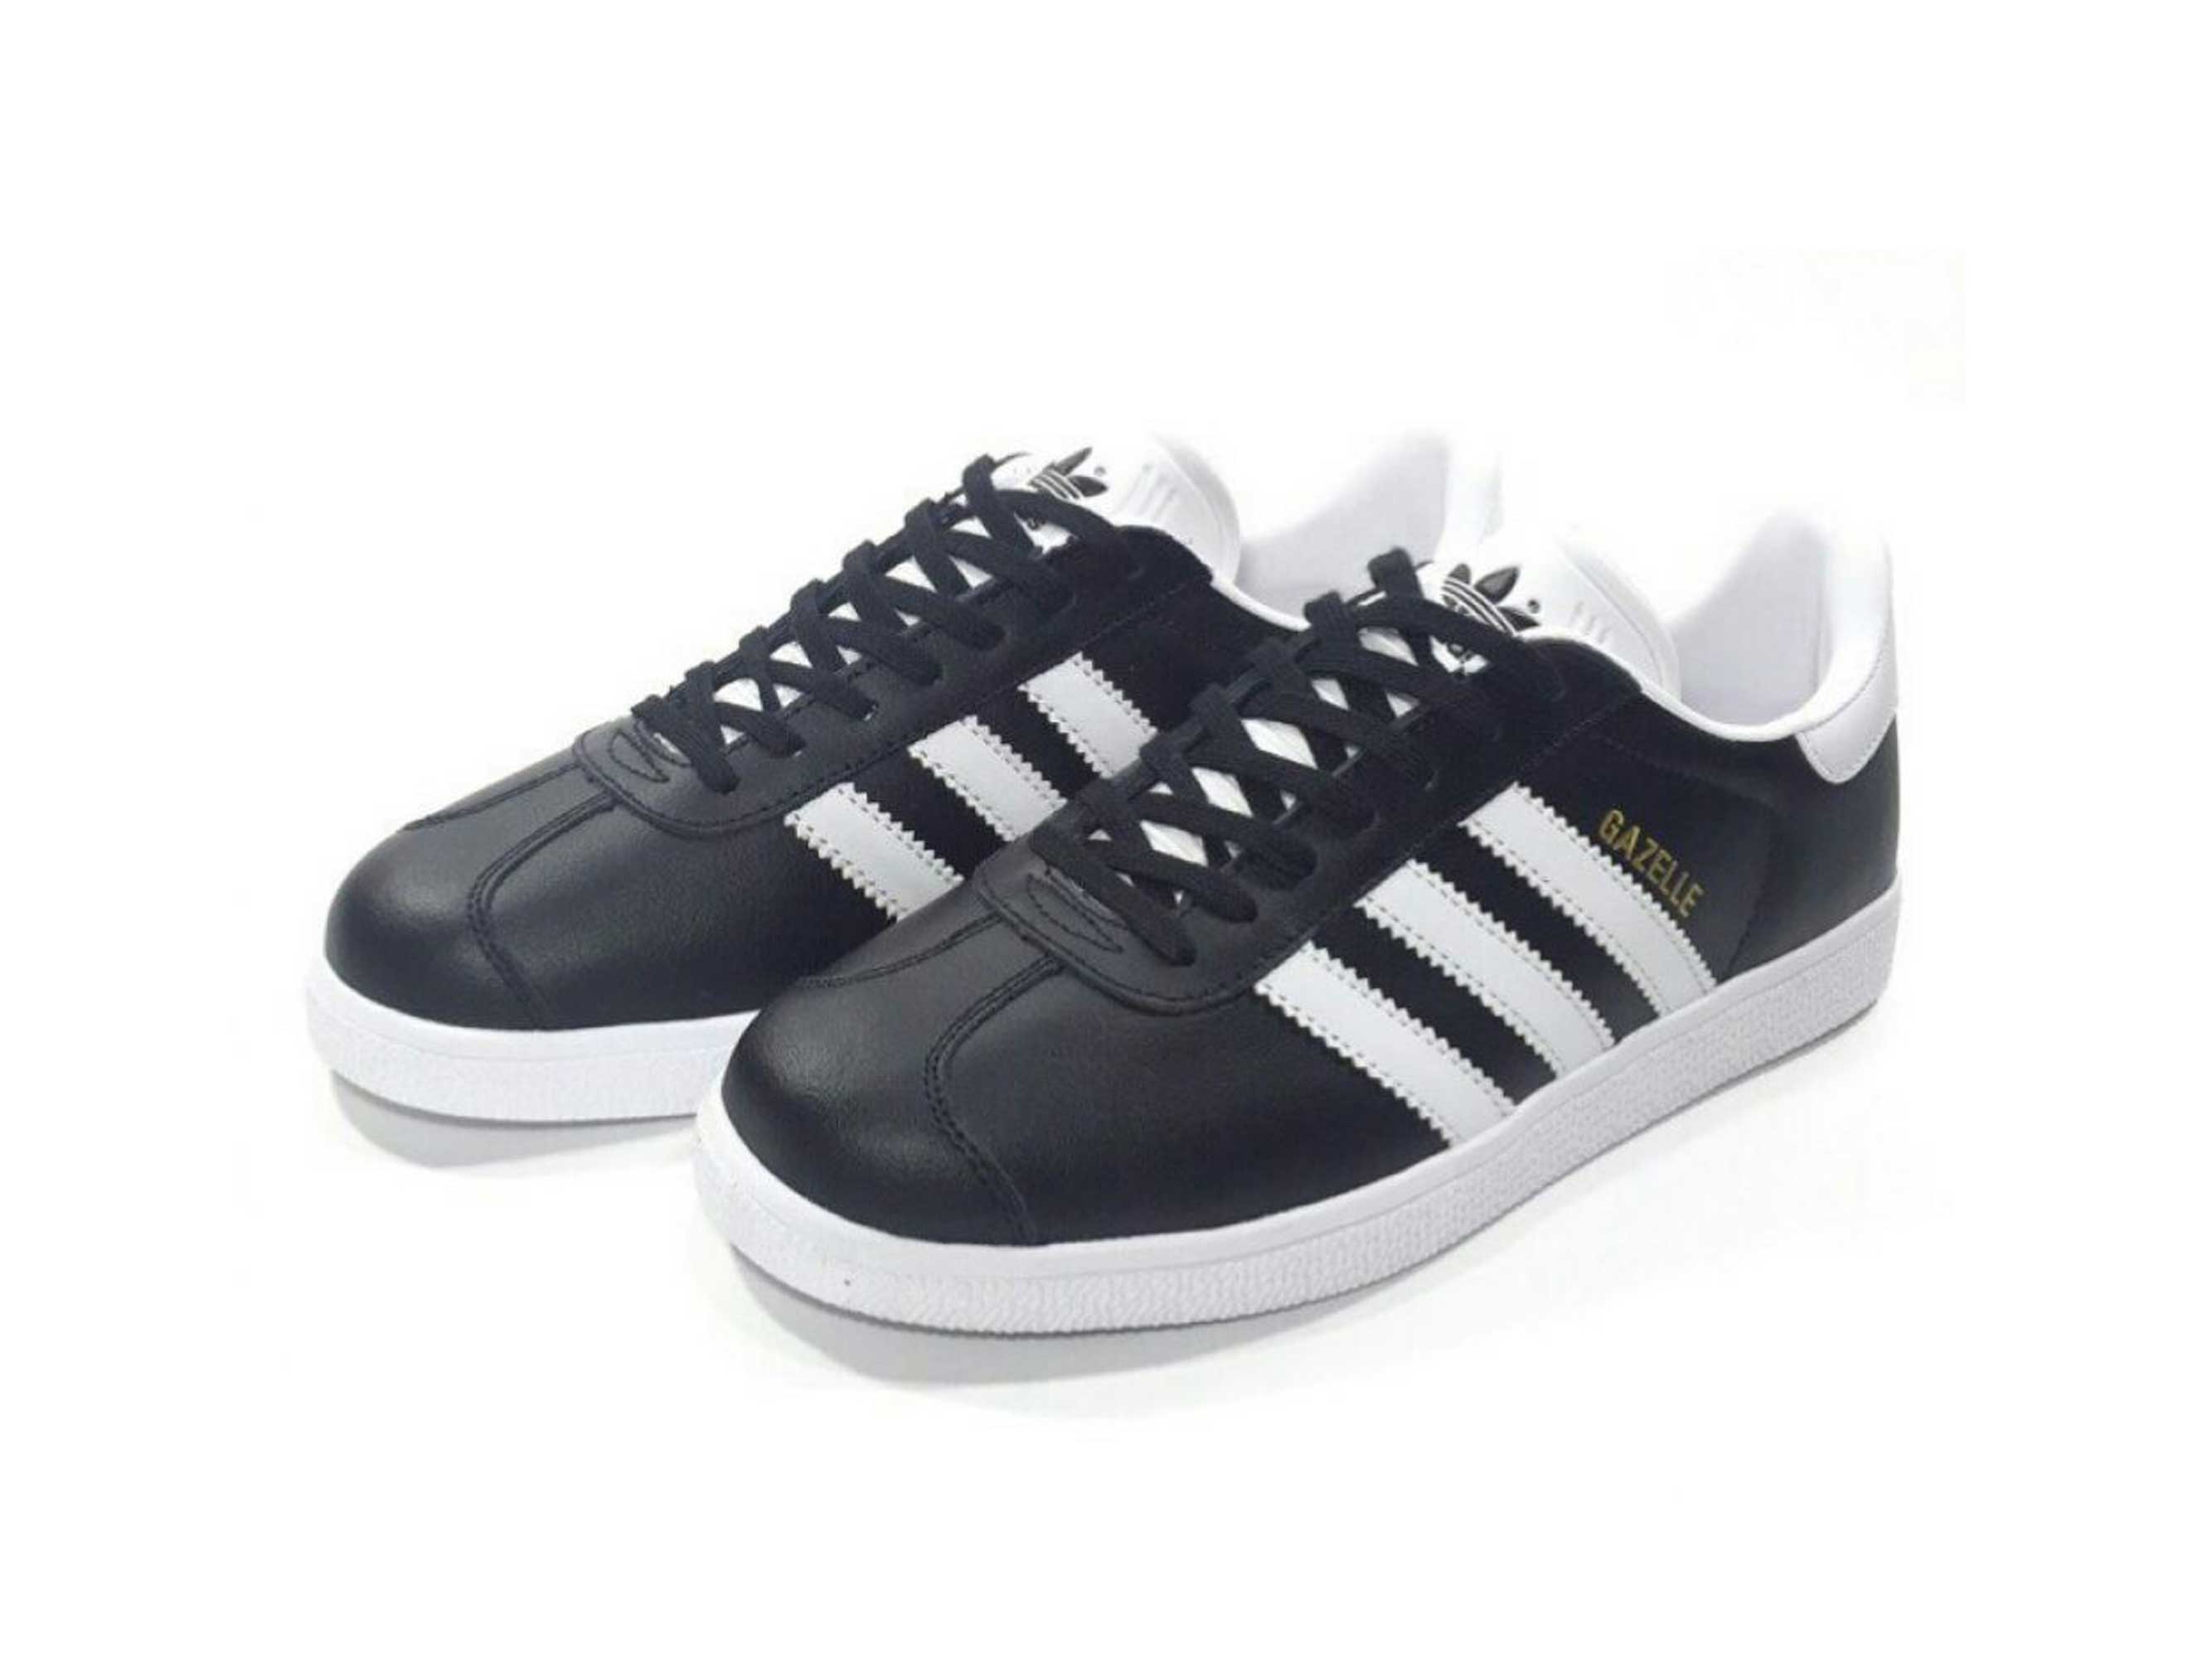 adidas gazelle black and white leather